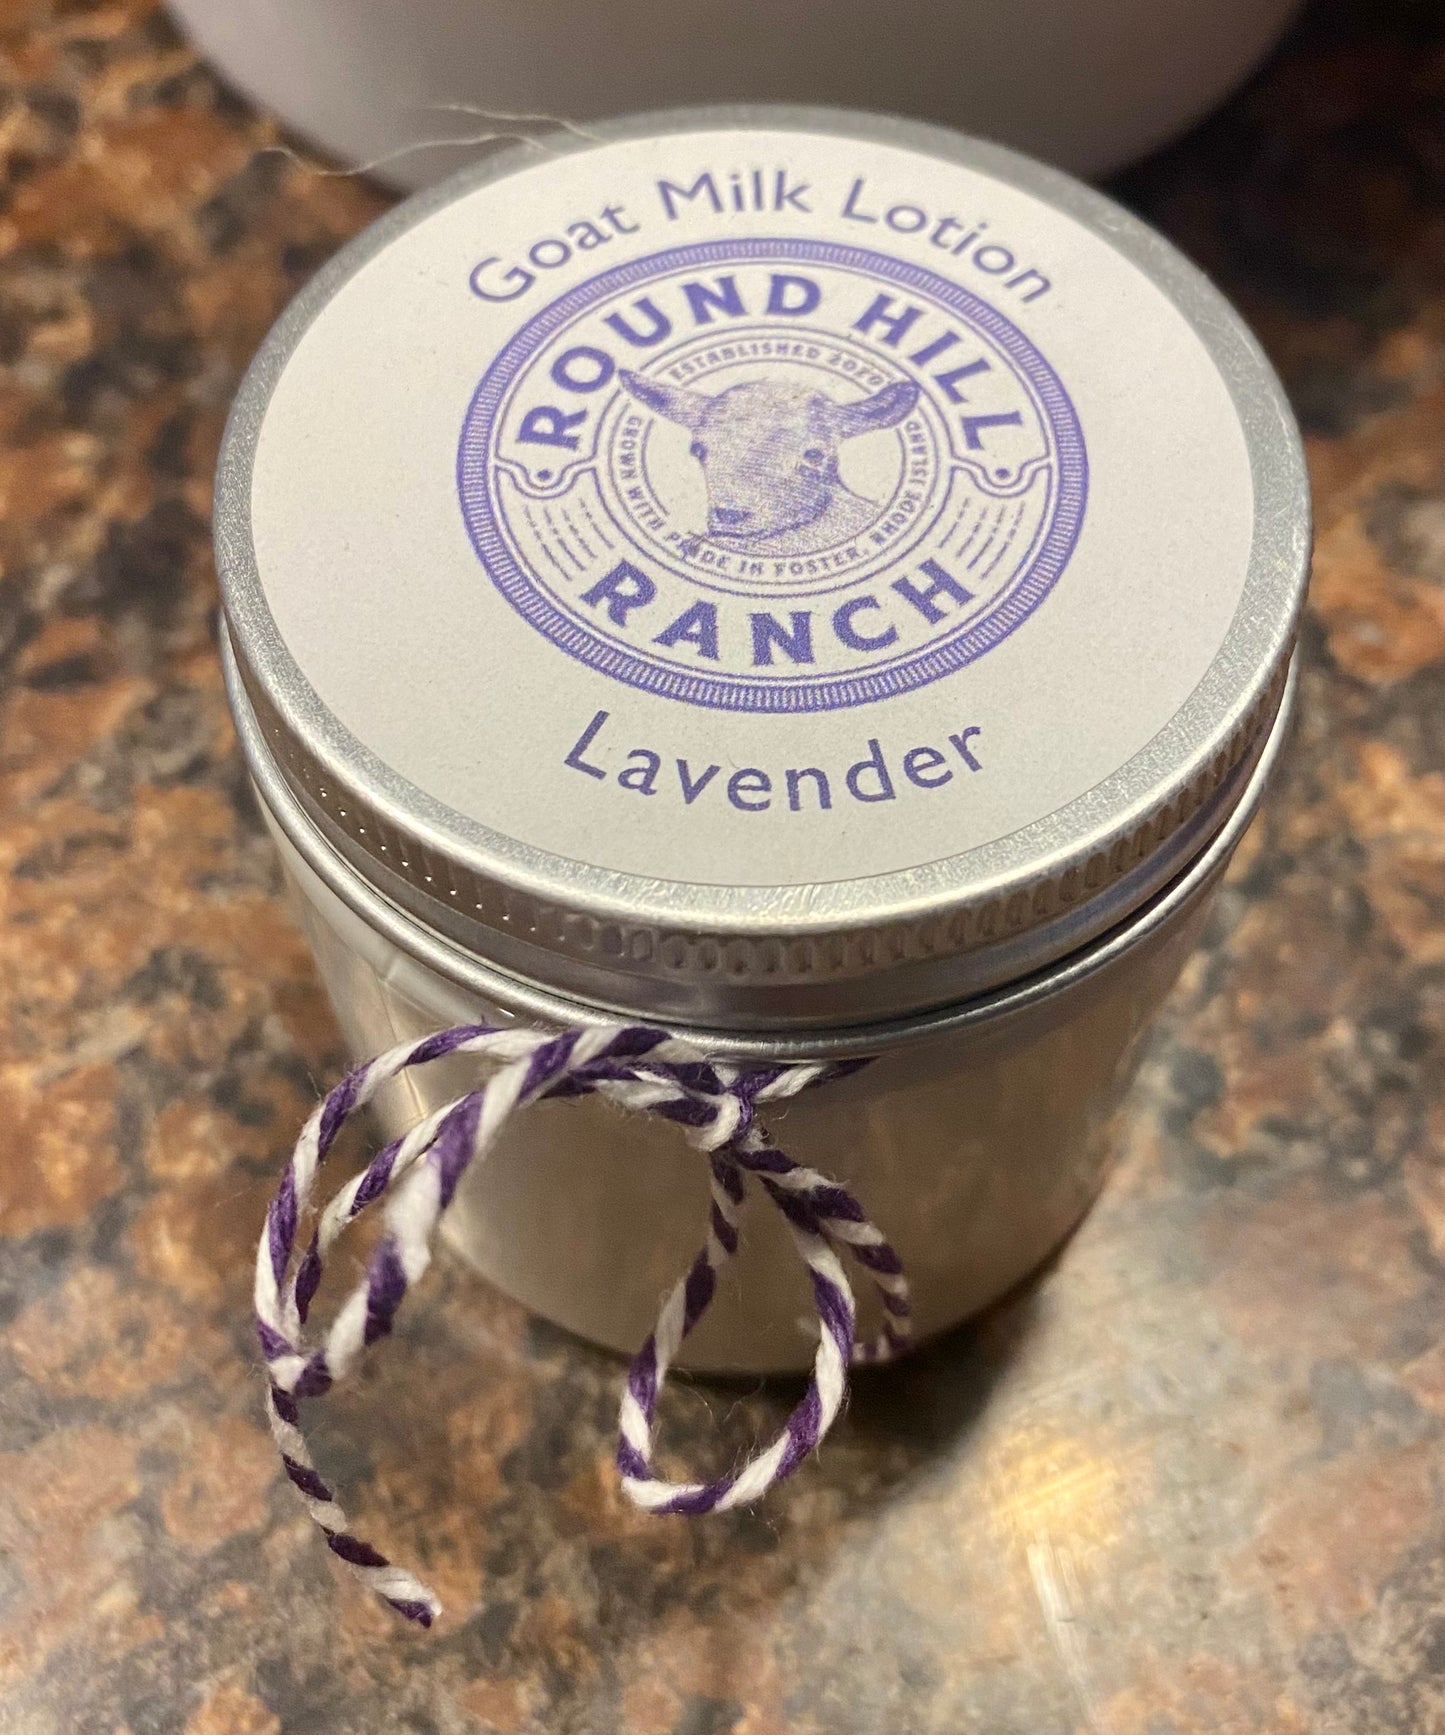 Goat Milk Lotion: Lavender